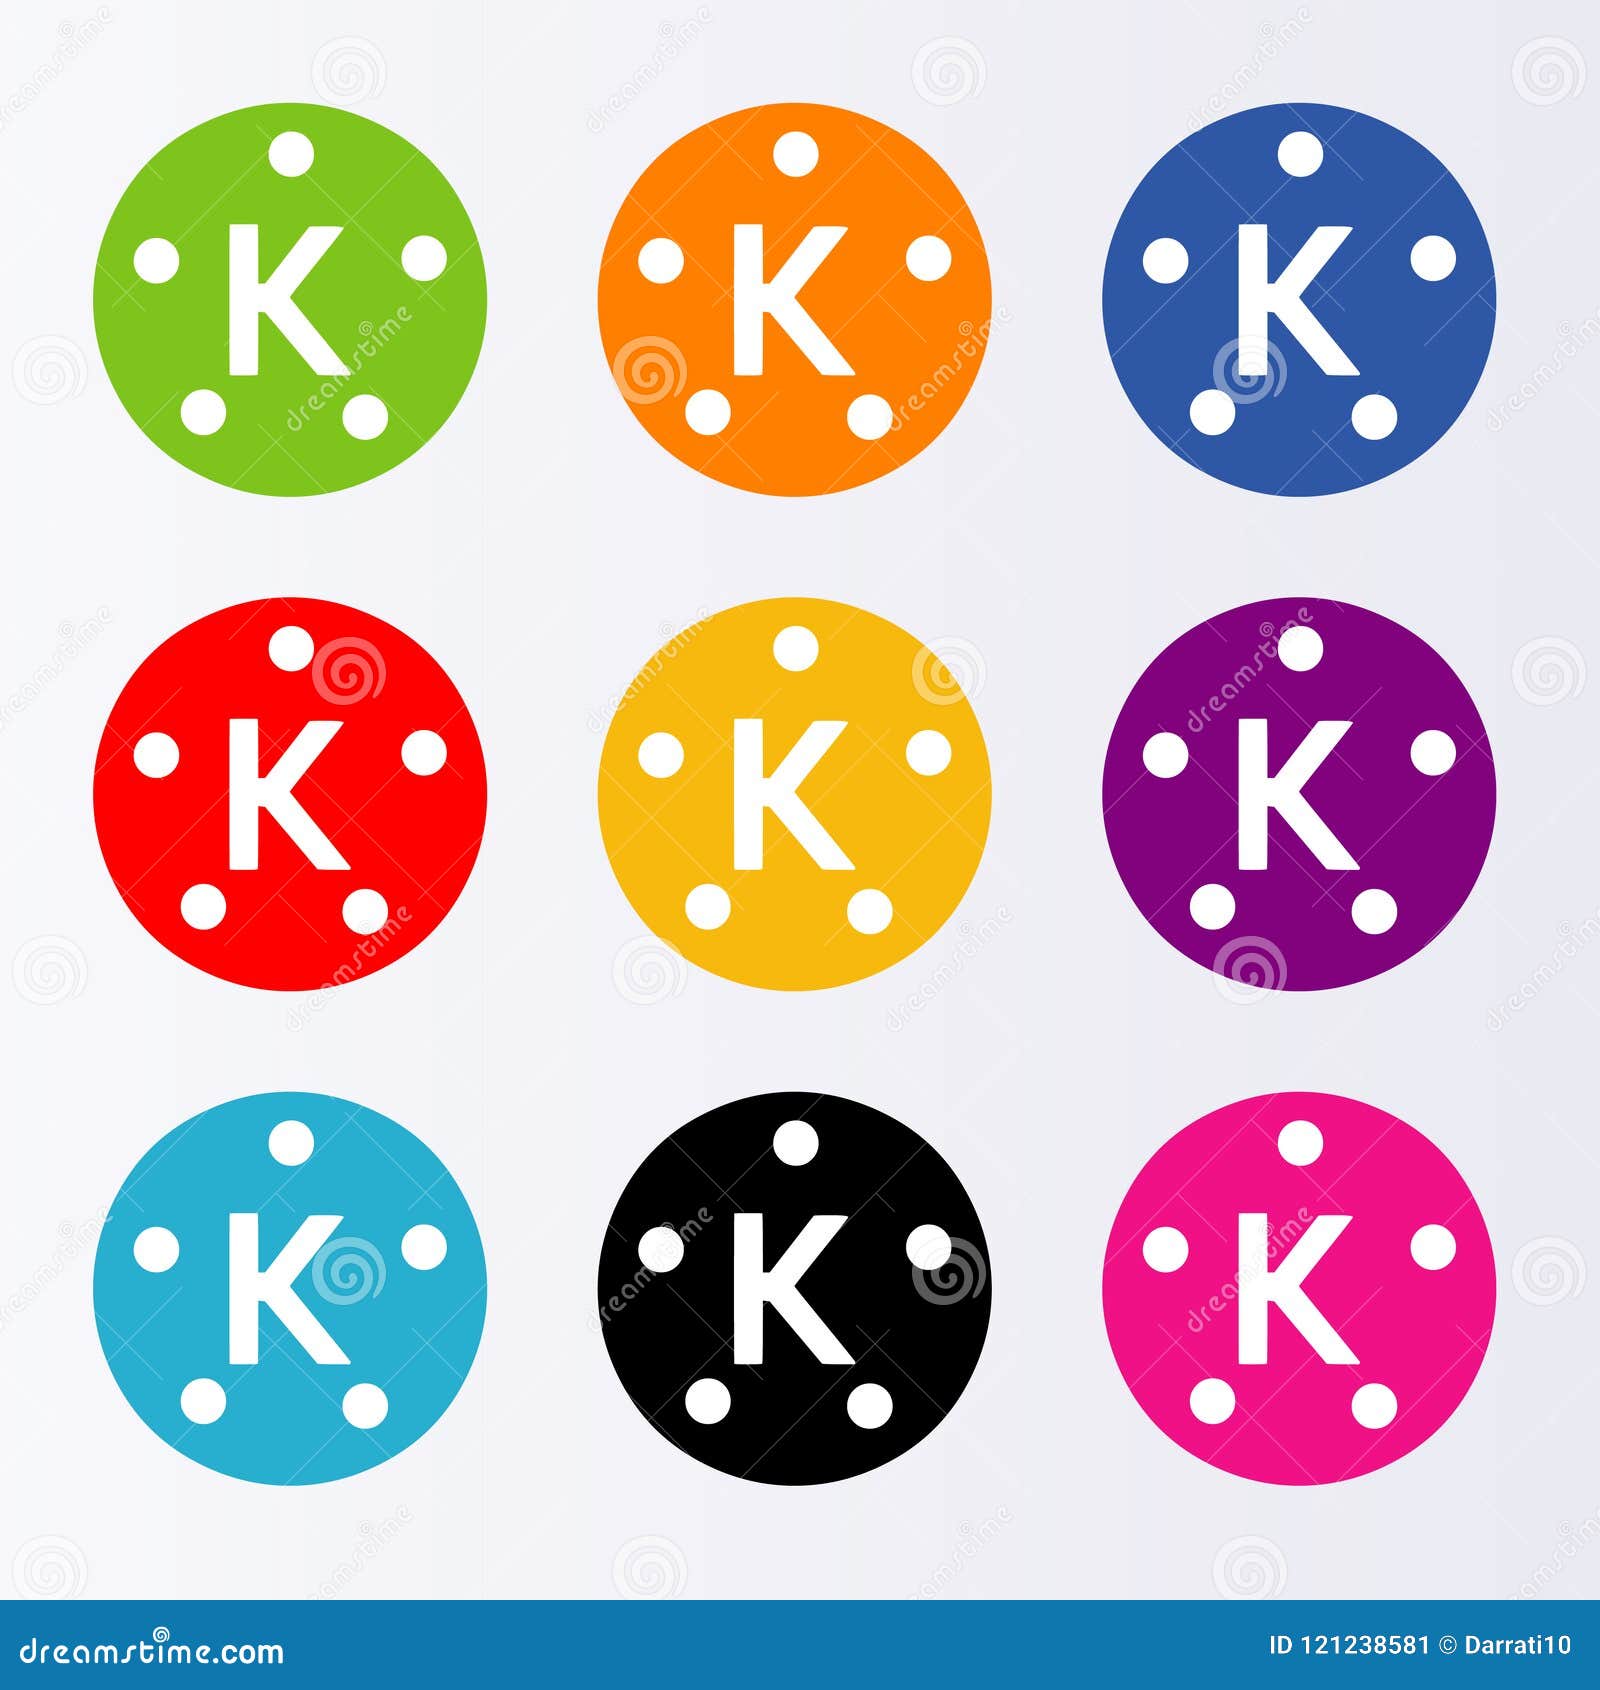 Logo Kine master stock vector. Illustration of kinemaster - 121238581